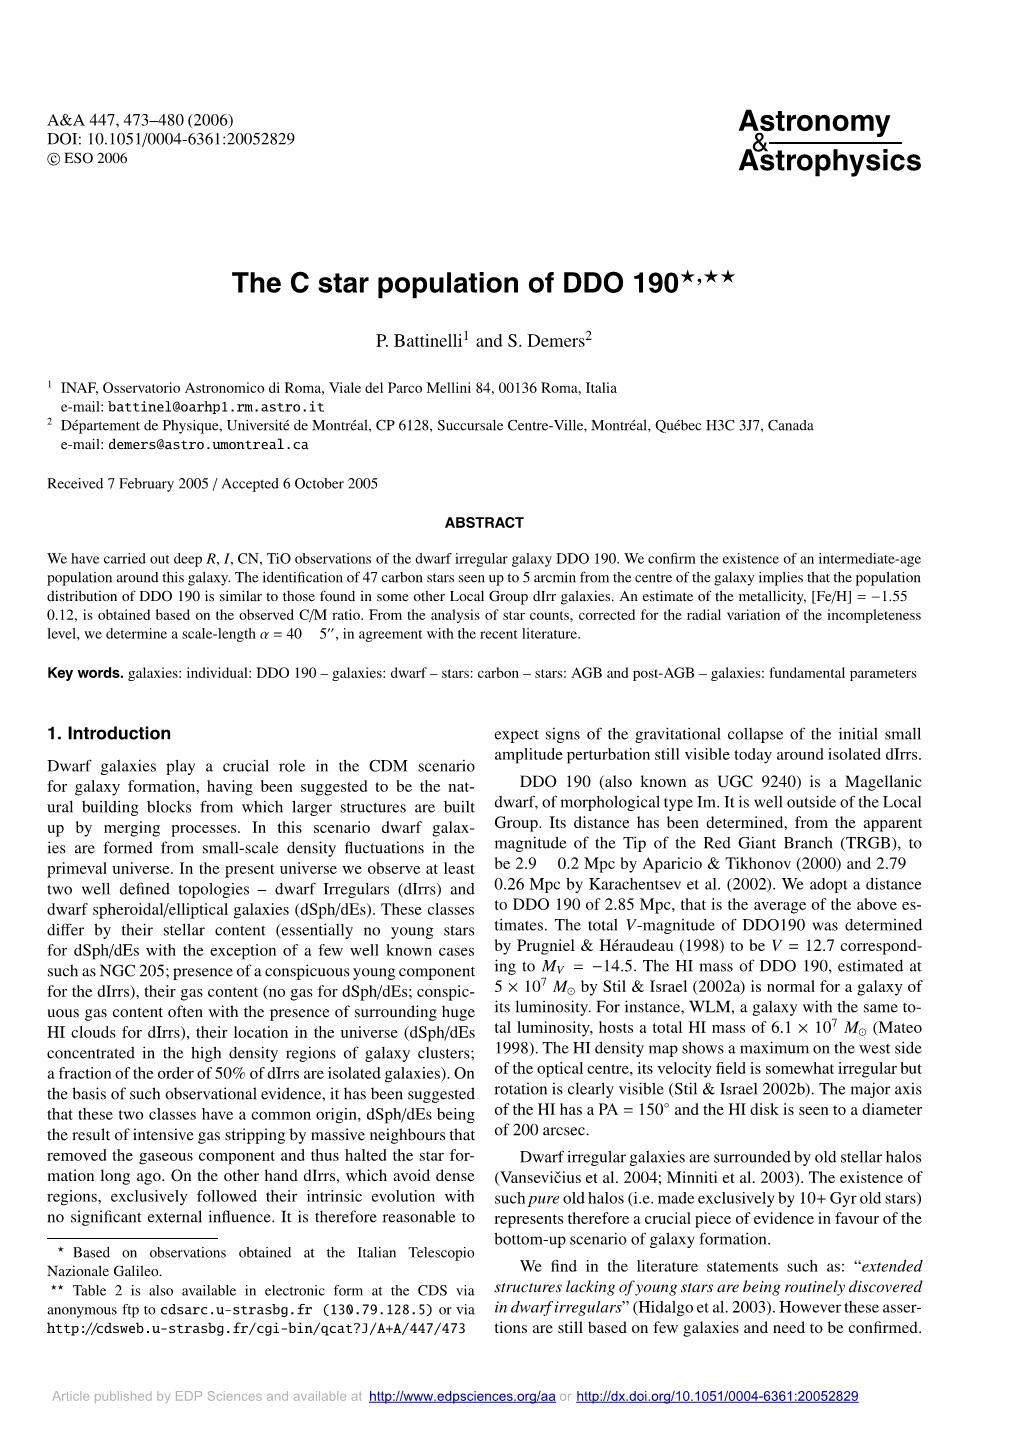 The C Star Population of DDO 190�,